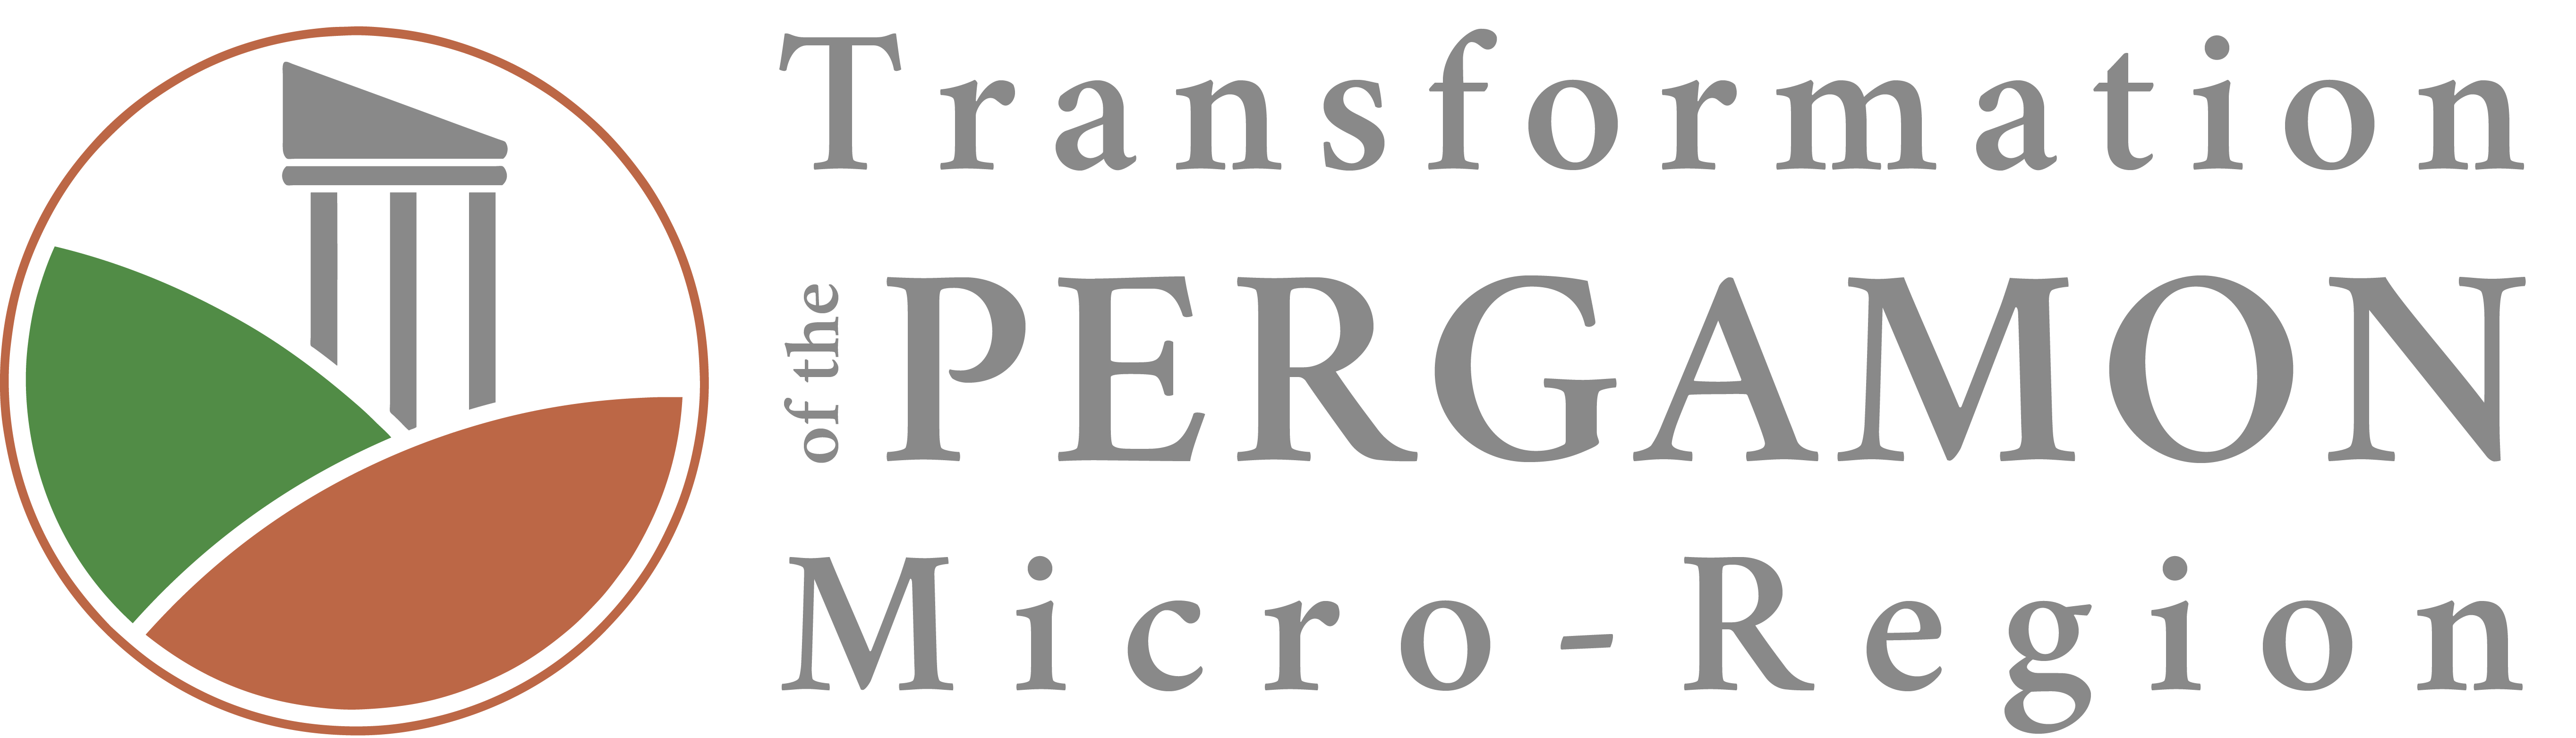 Pergamon Micro-Region